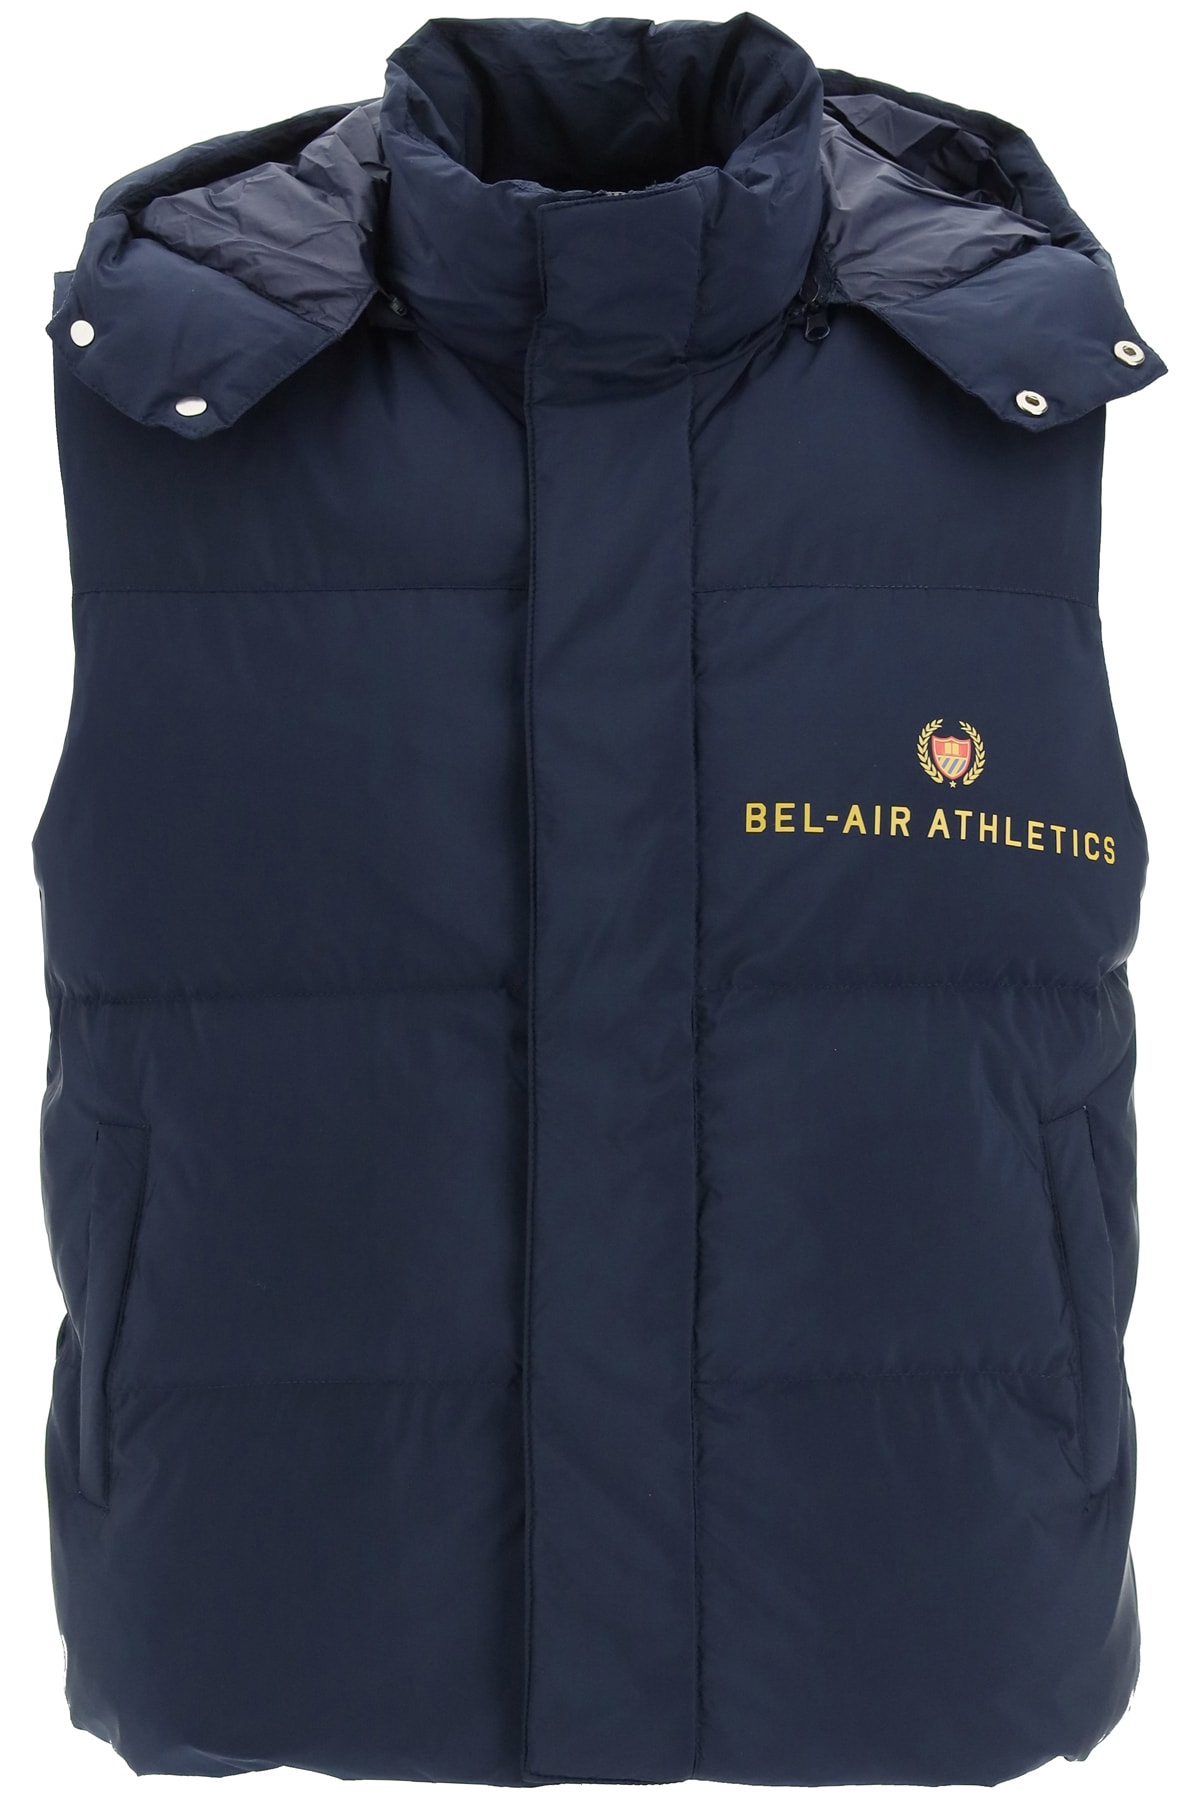 Bel-Air Athletics Padded Vest